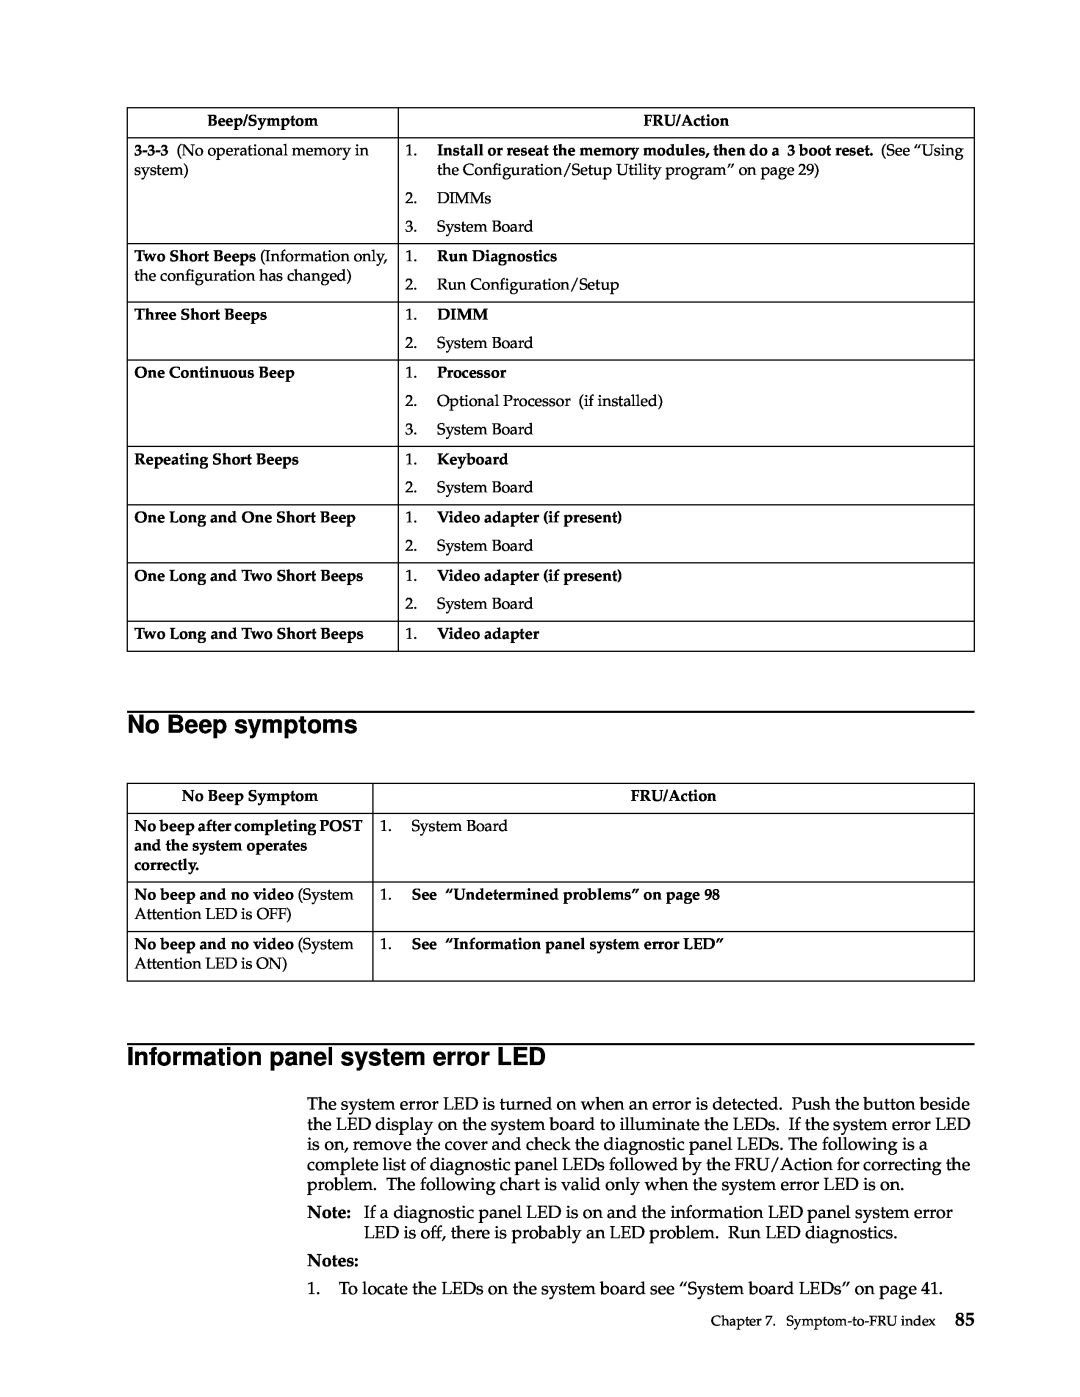 IBM xSeries 330 manual No Beep symptoms, Information panel system error LED, Notes 